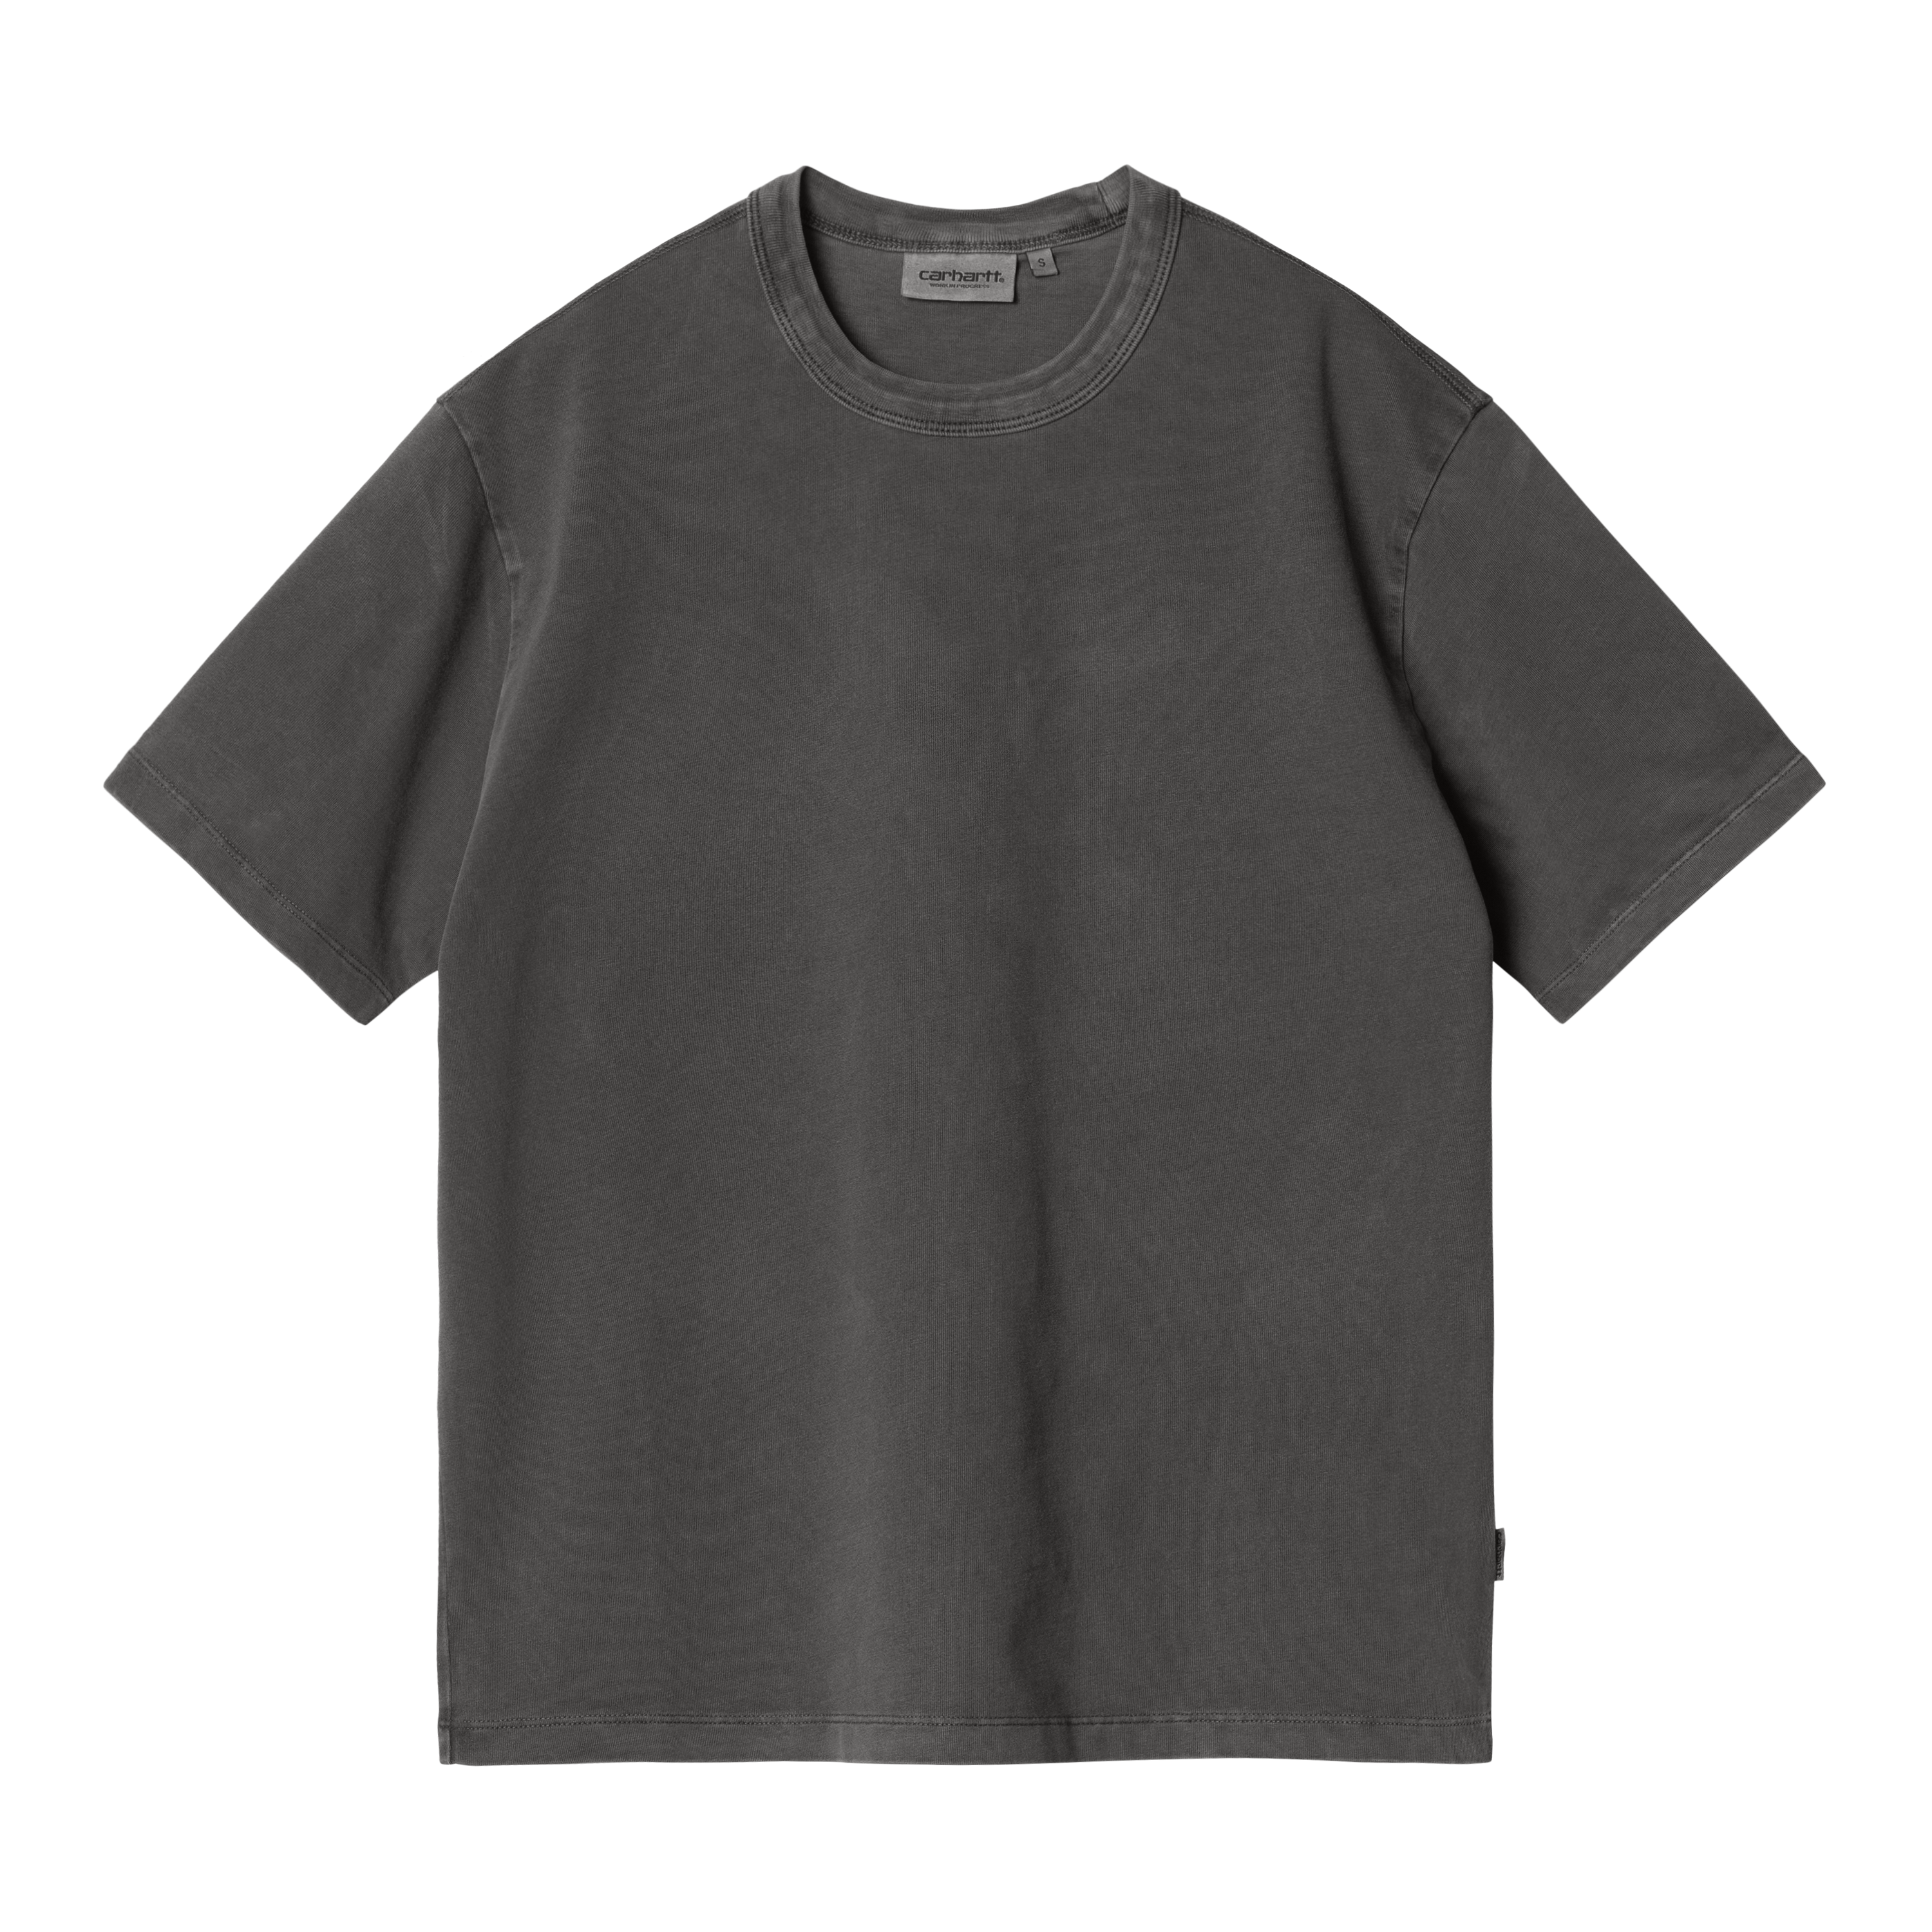 Carhartt WIP Women’s Short Sleeve Taos T-Shirt in Schwarz